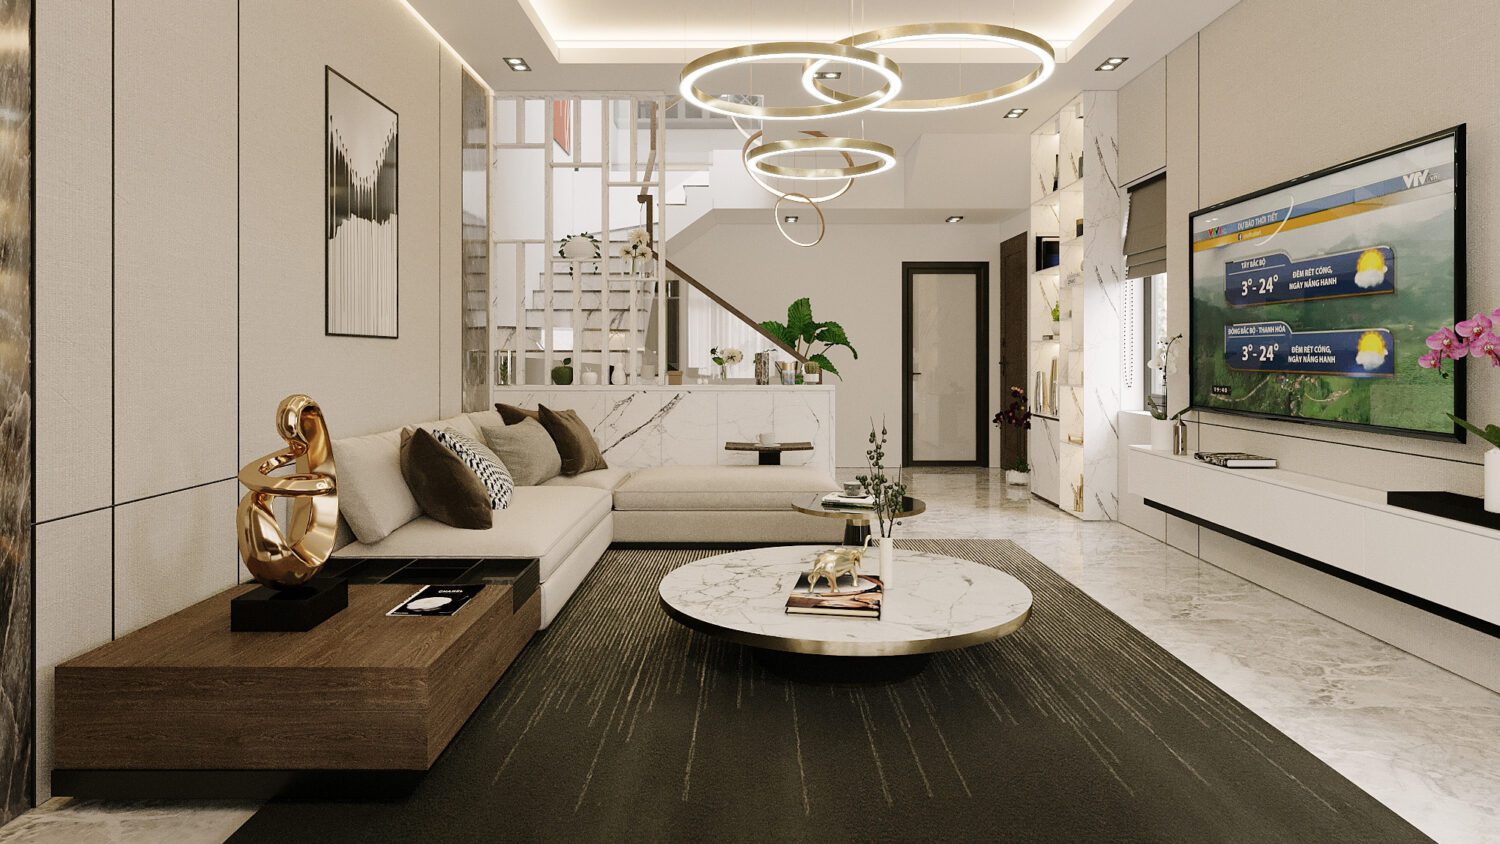 13135. 3D Living Room Interior Model Download